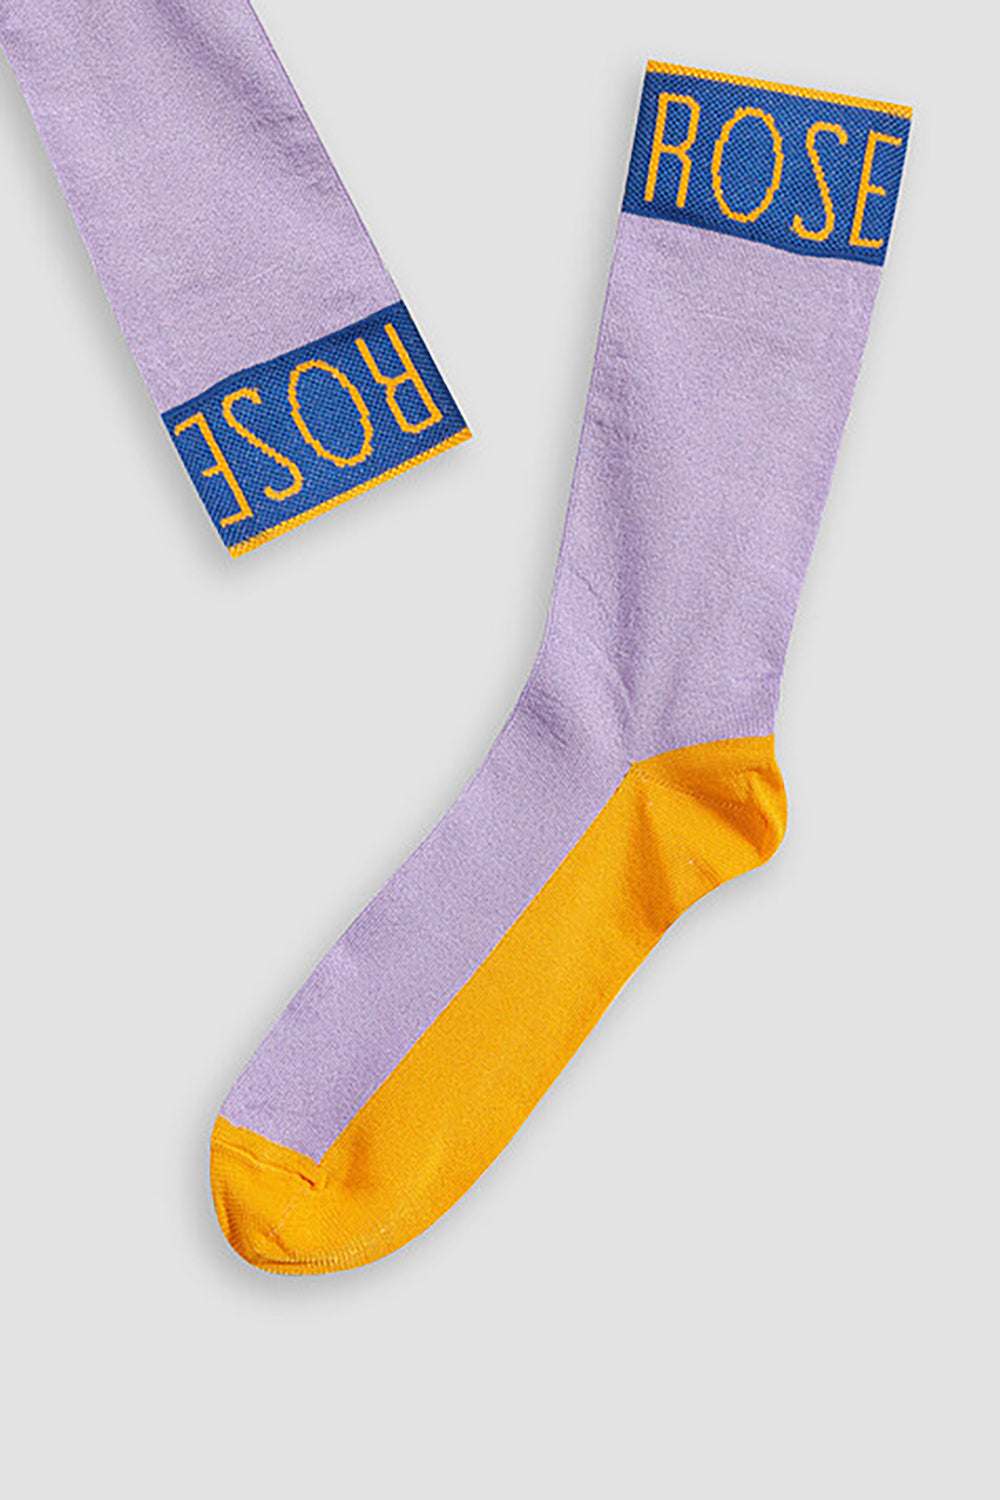 Fiso socks